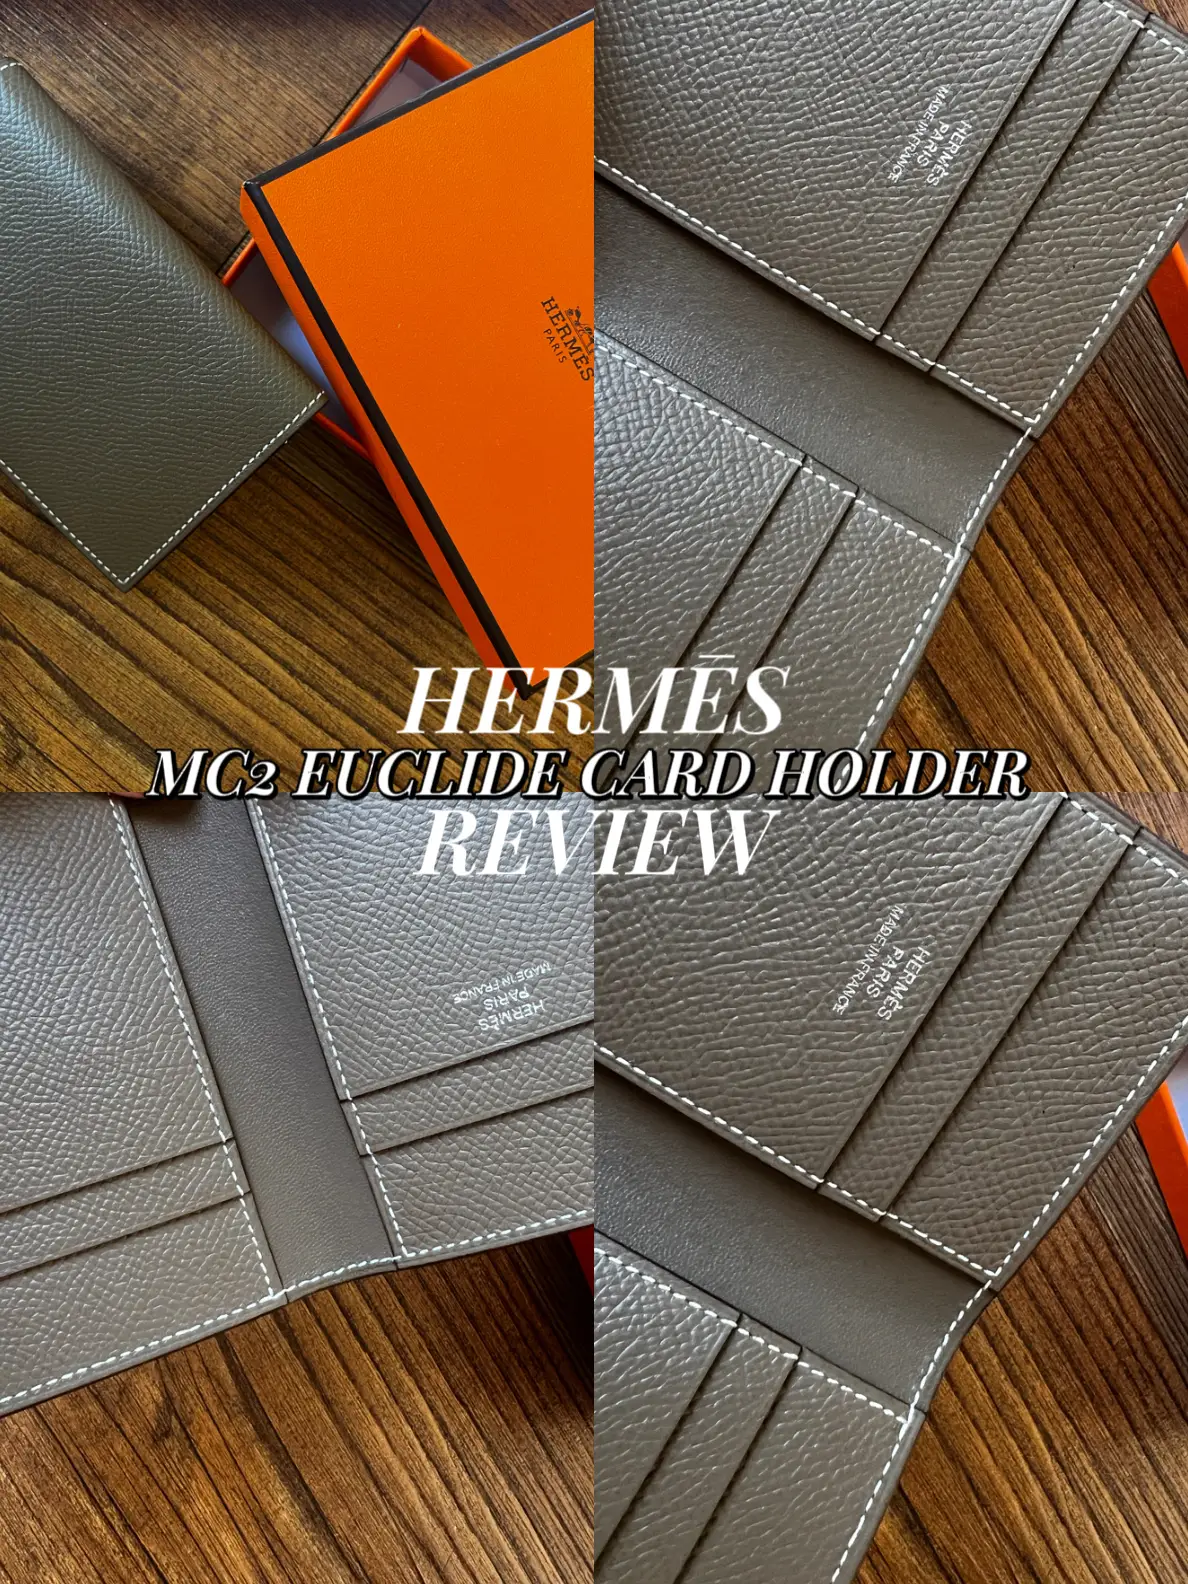 MC2 Euclide Card Holder by Hermes:Save or Splurge?